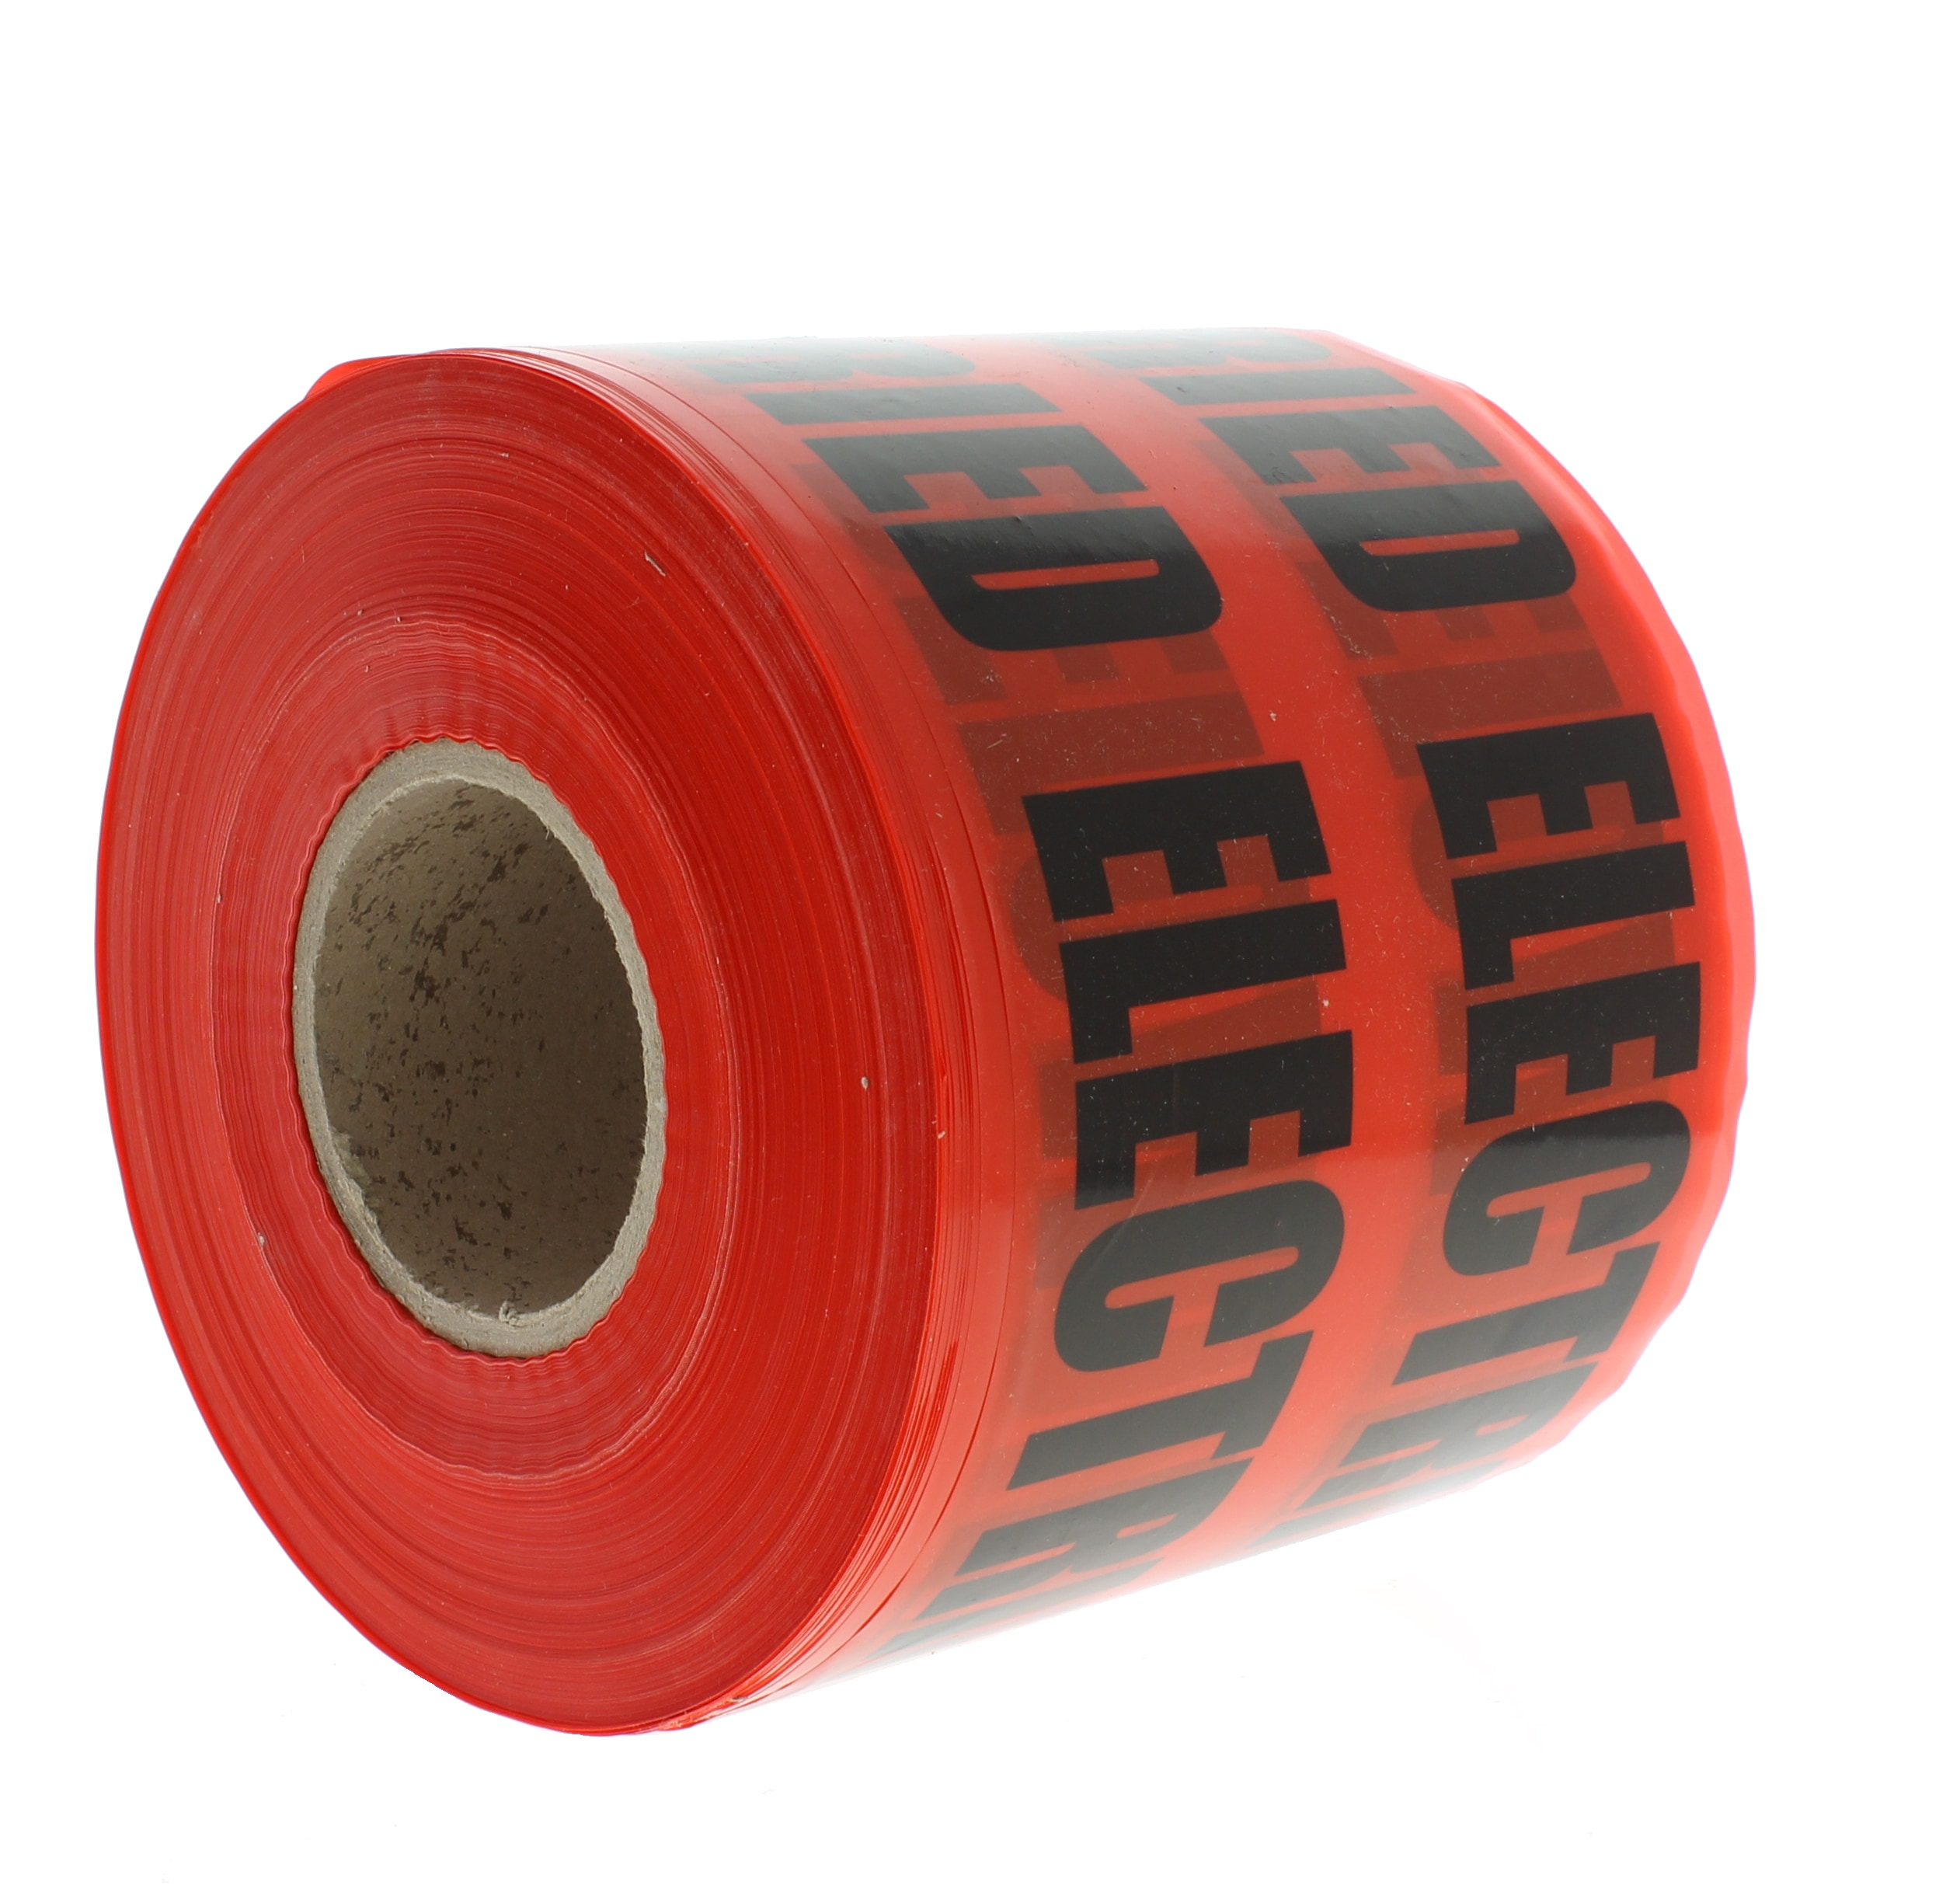 Red Spike Tape Paper 1/2 Inch x 60 Yards - BarnDoor Lighting